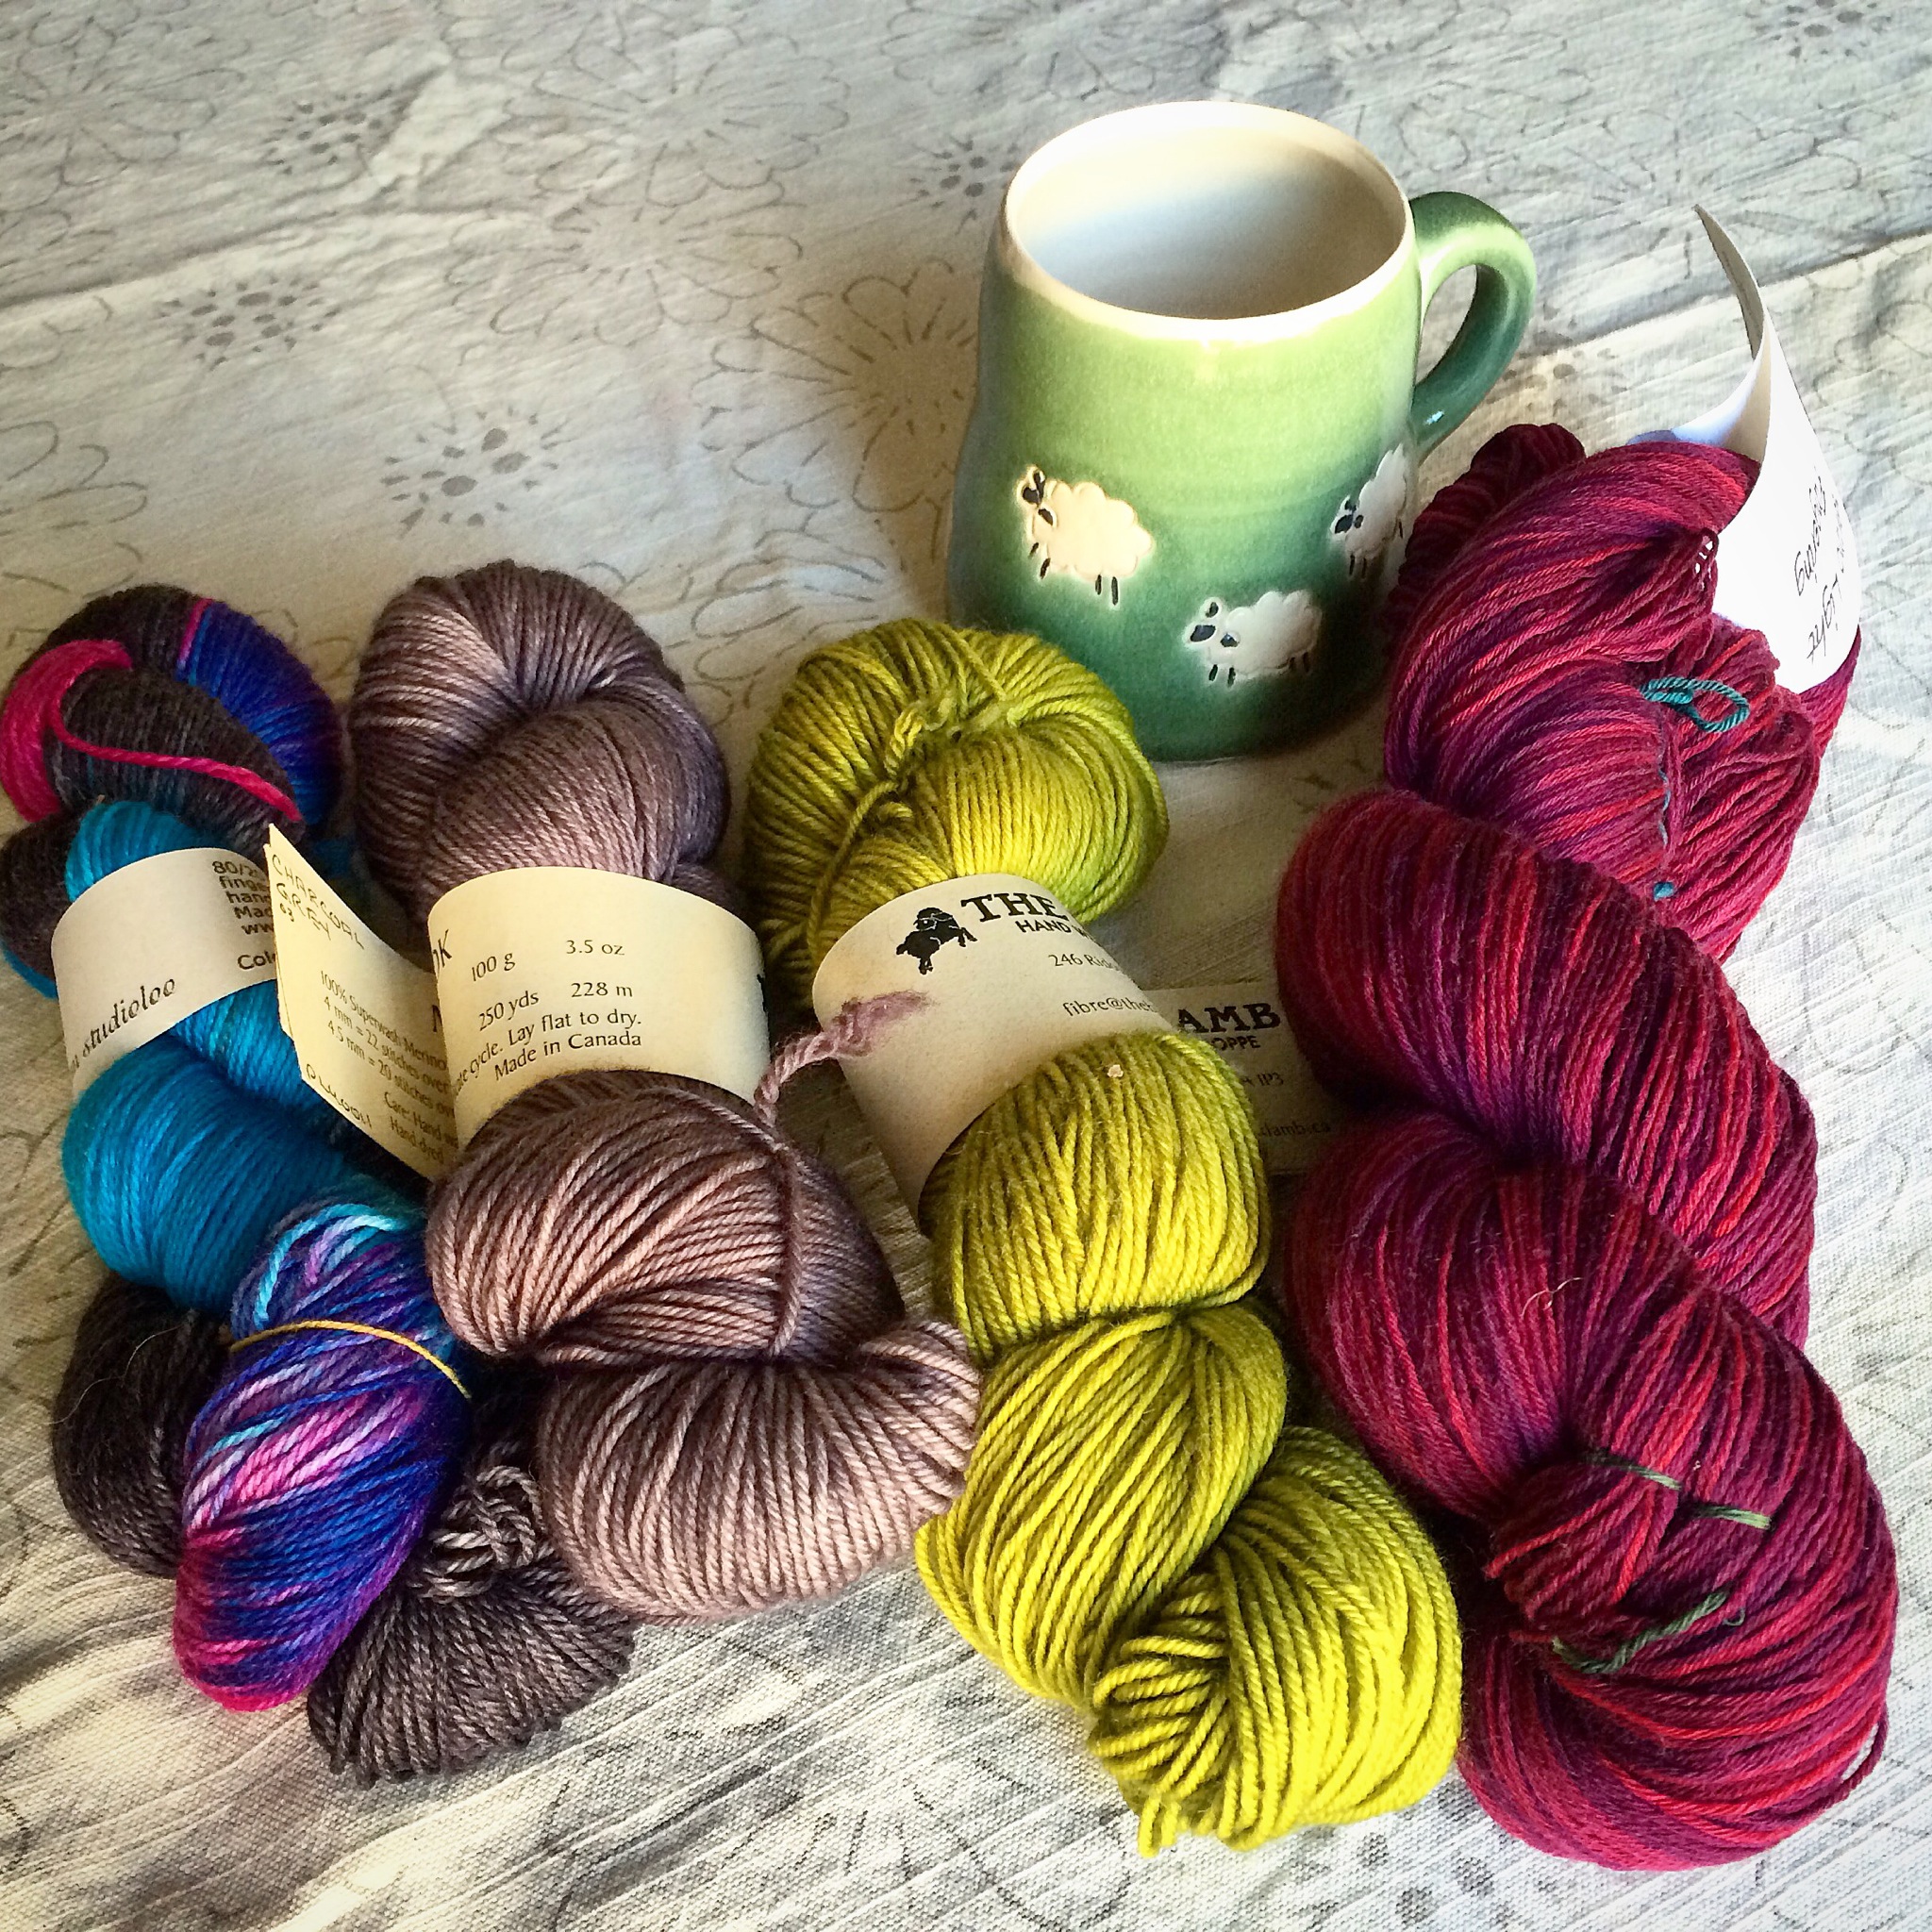 4 skeins of yarn and a hand-crafted mug